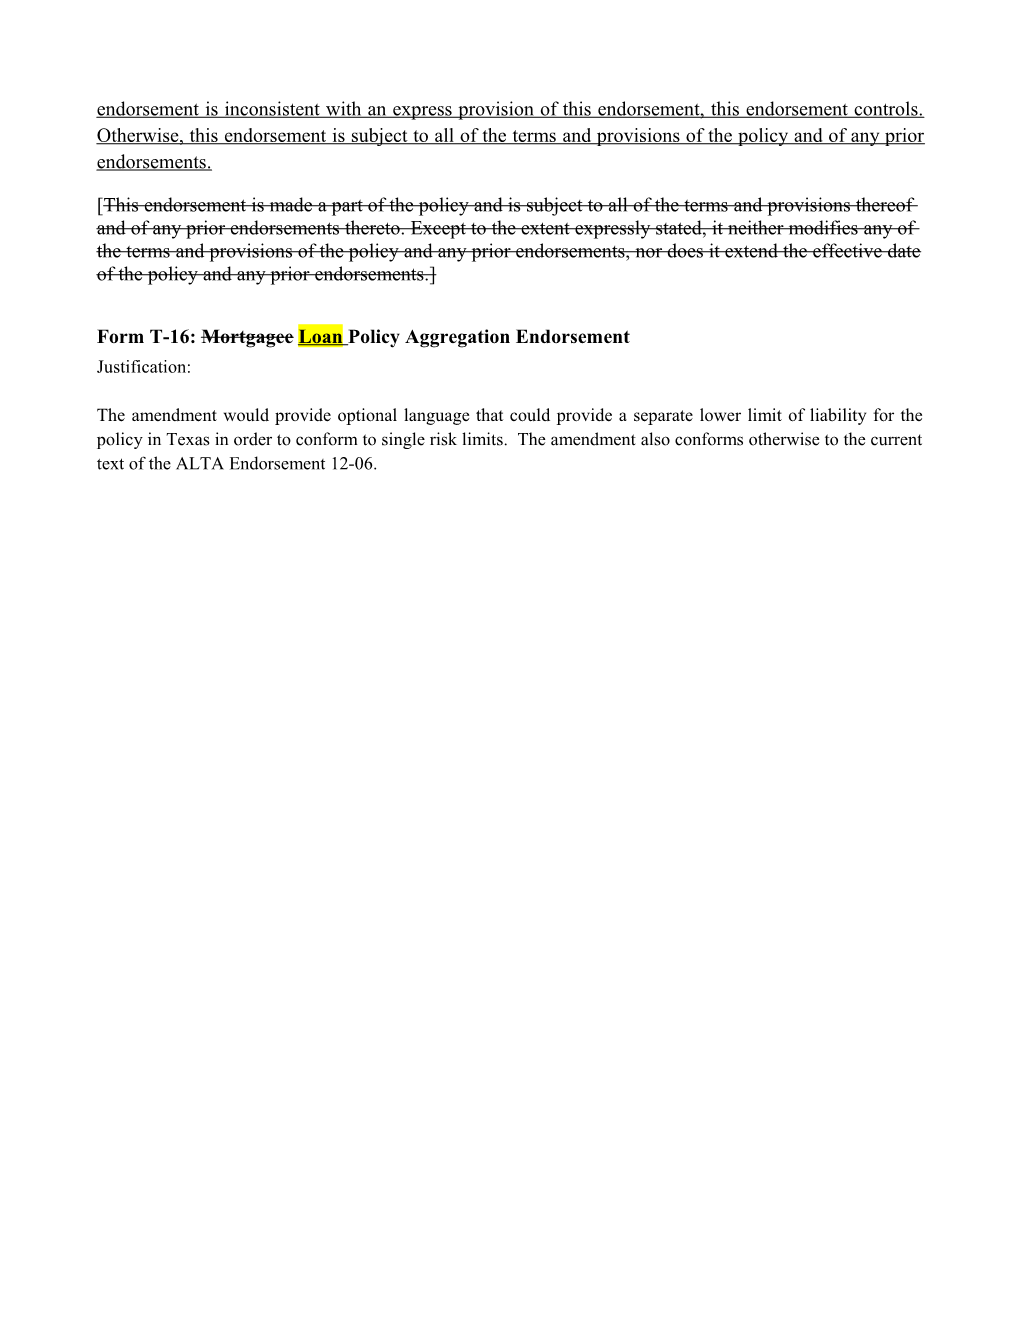 STGC Agenda Item 2012-57 (Amended) Form T-16 (00595420-2)